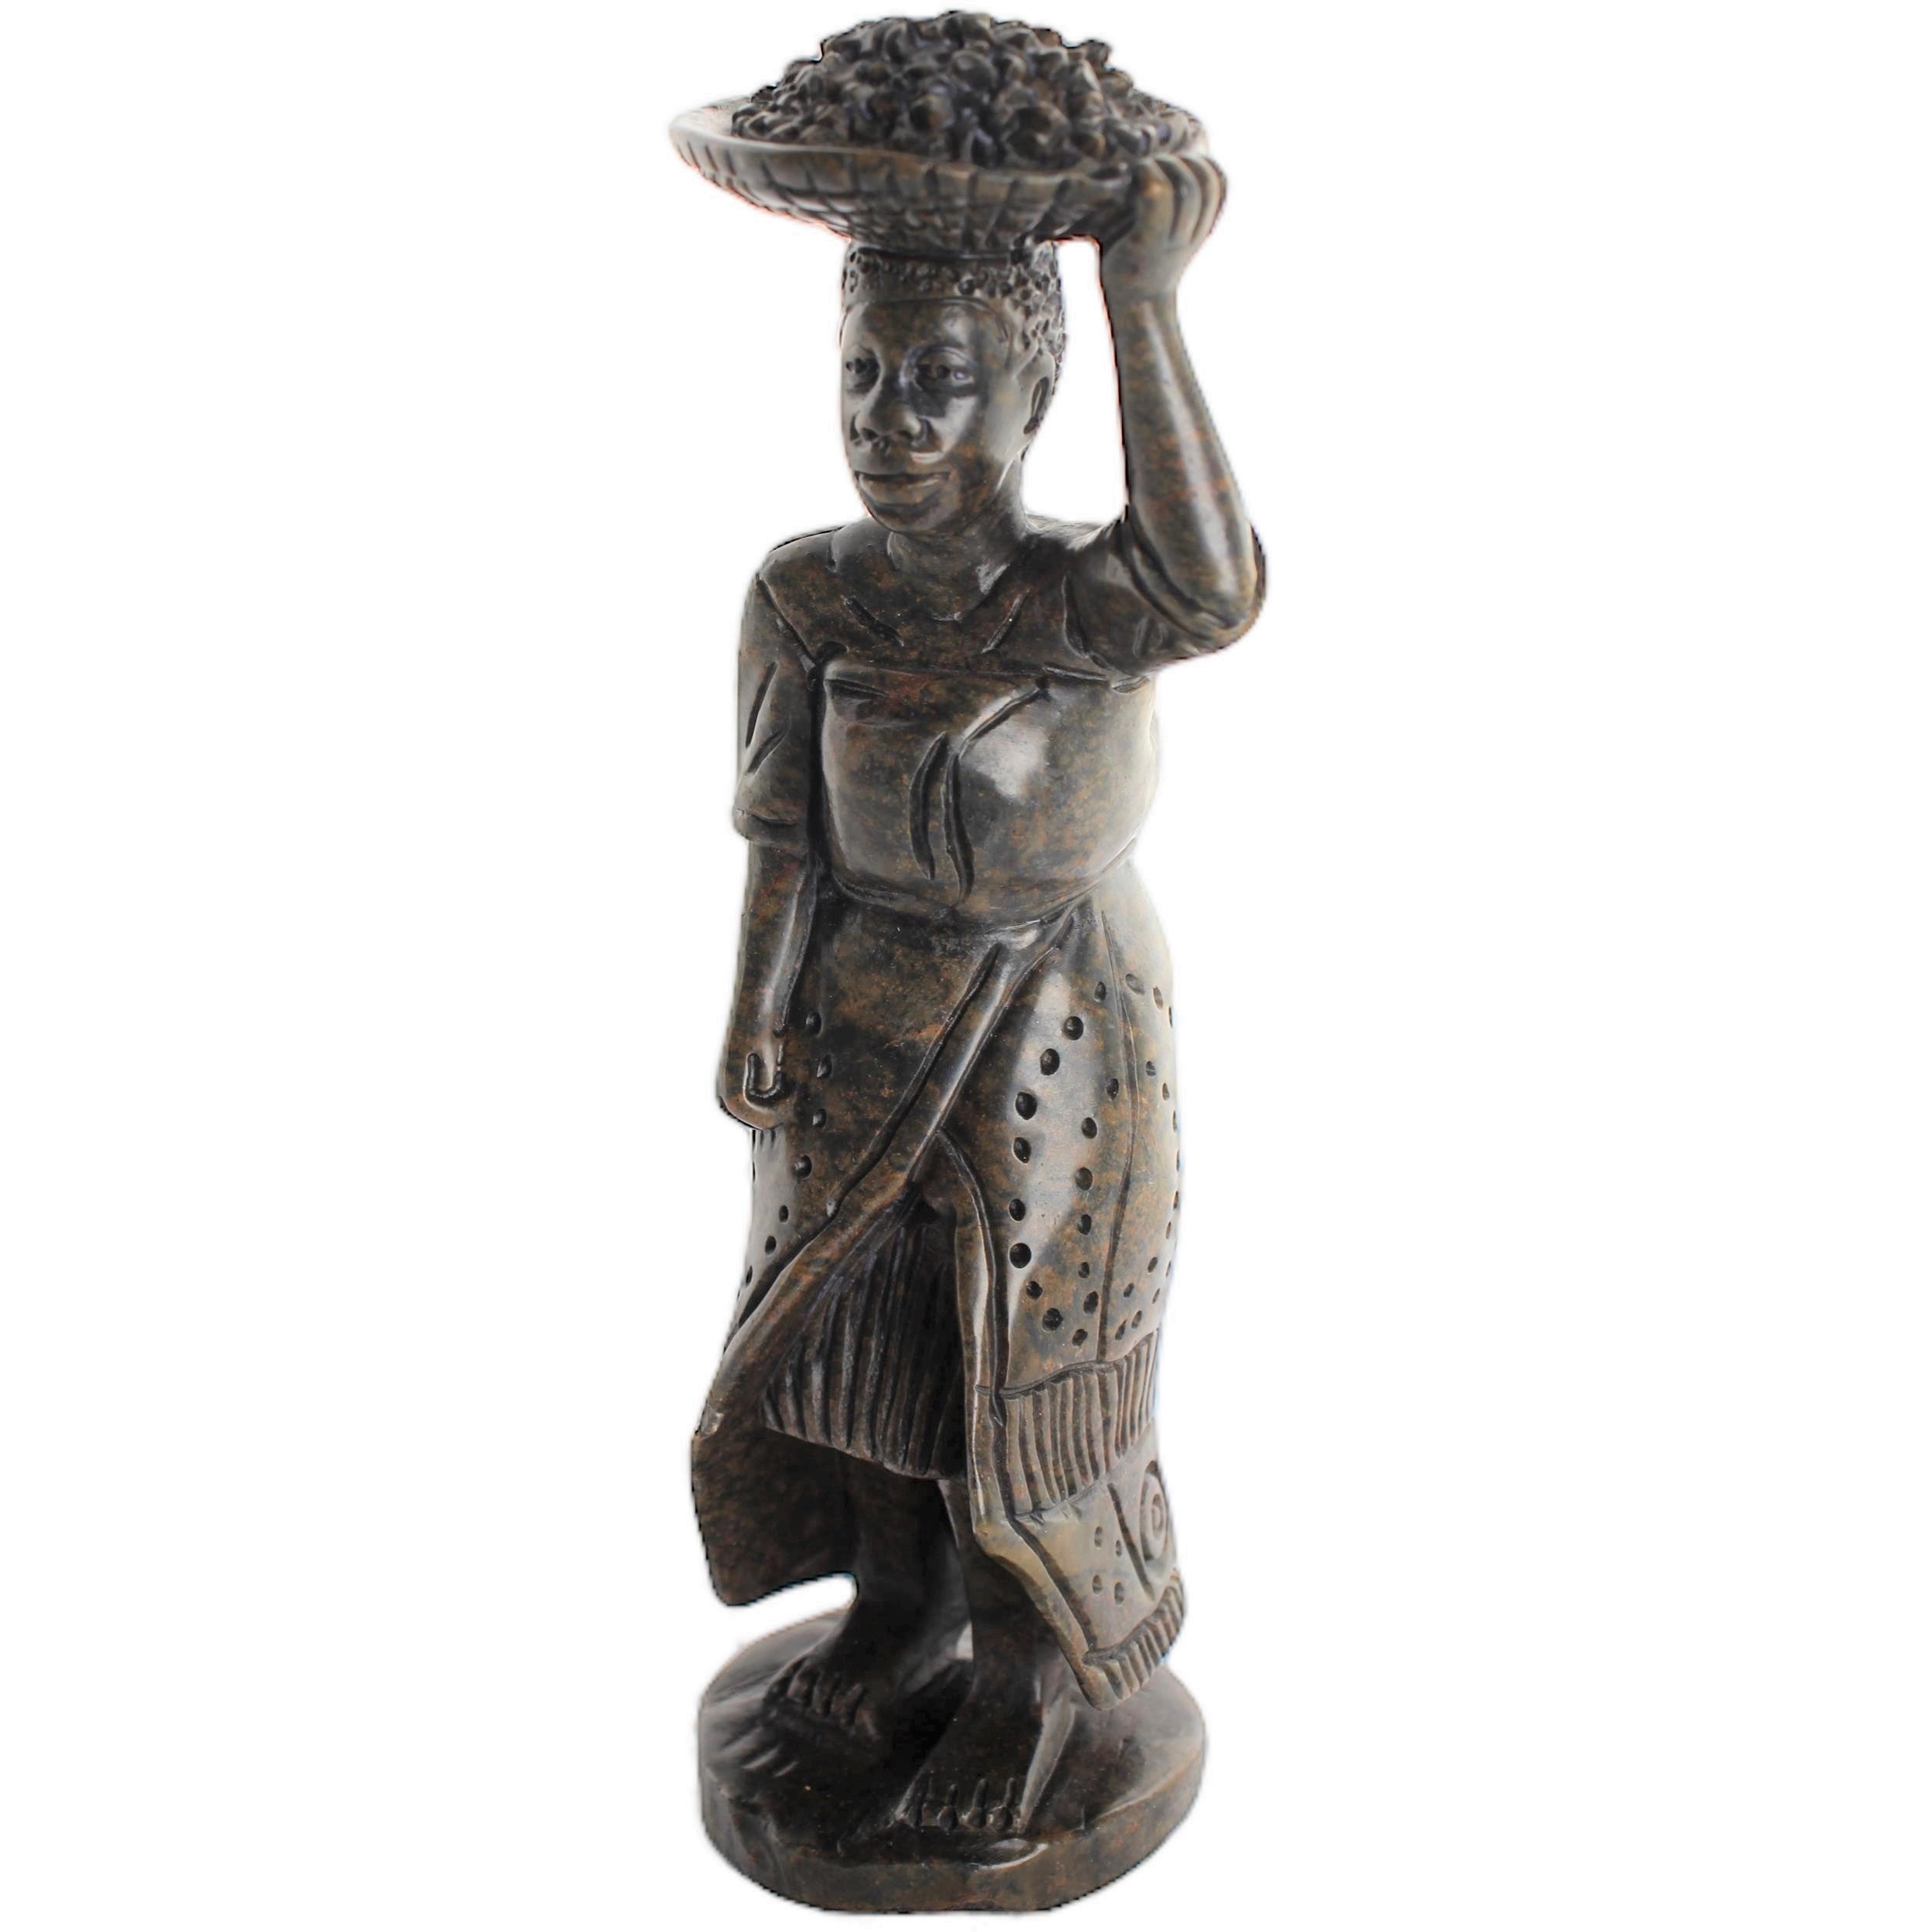 Shona Tribe Serpentine Stone Warrior Figure ~9.4" Tall